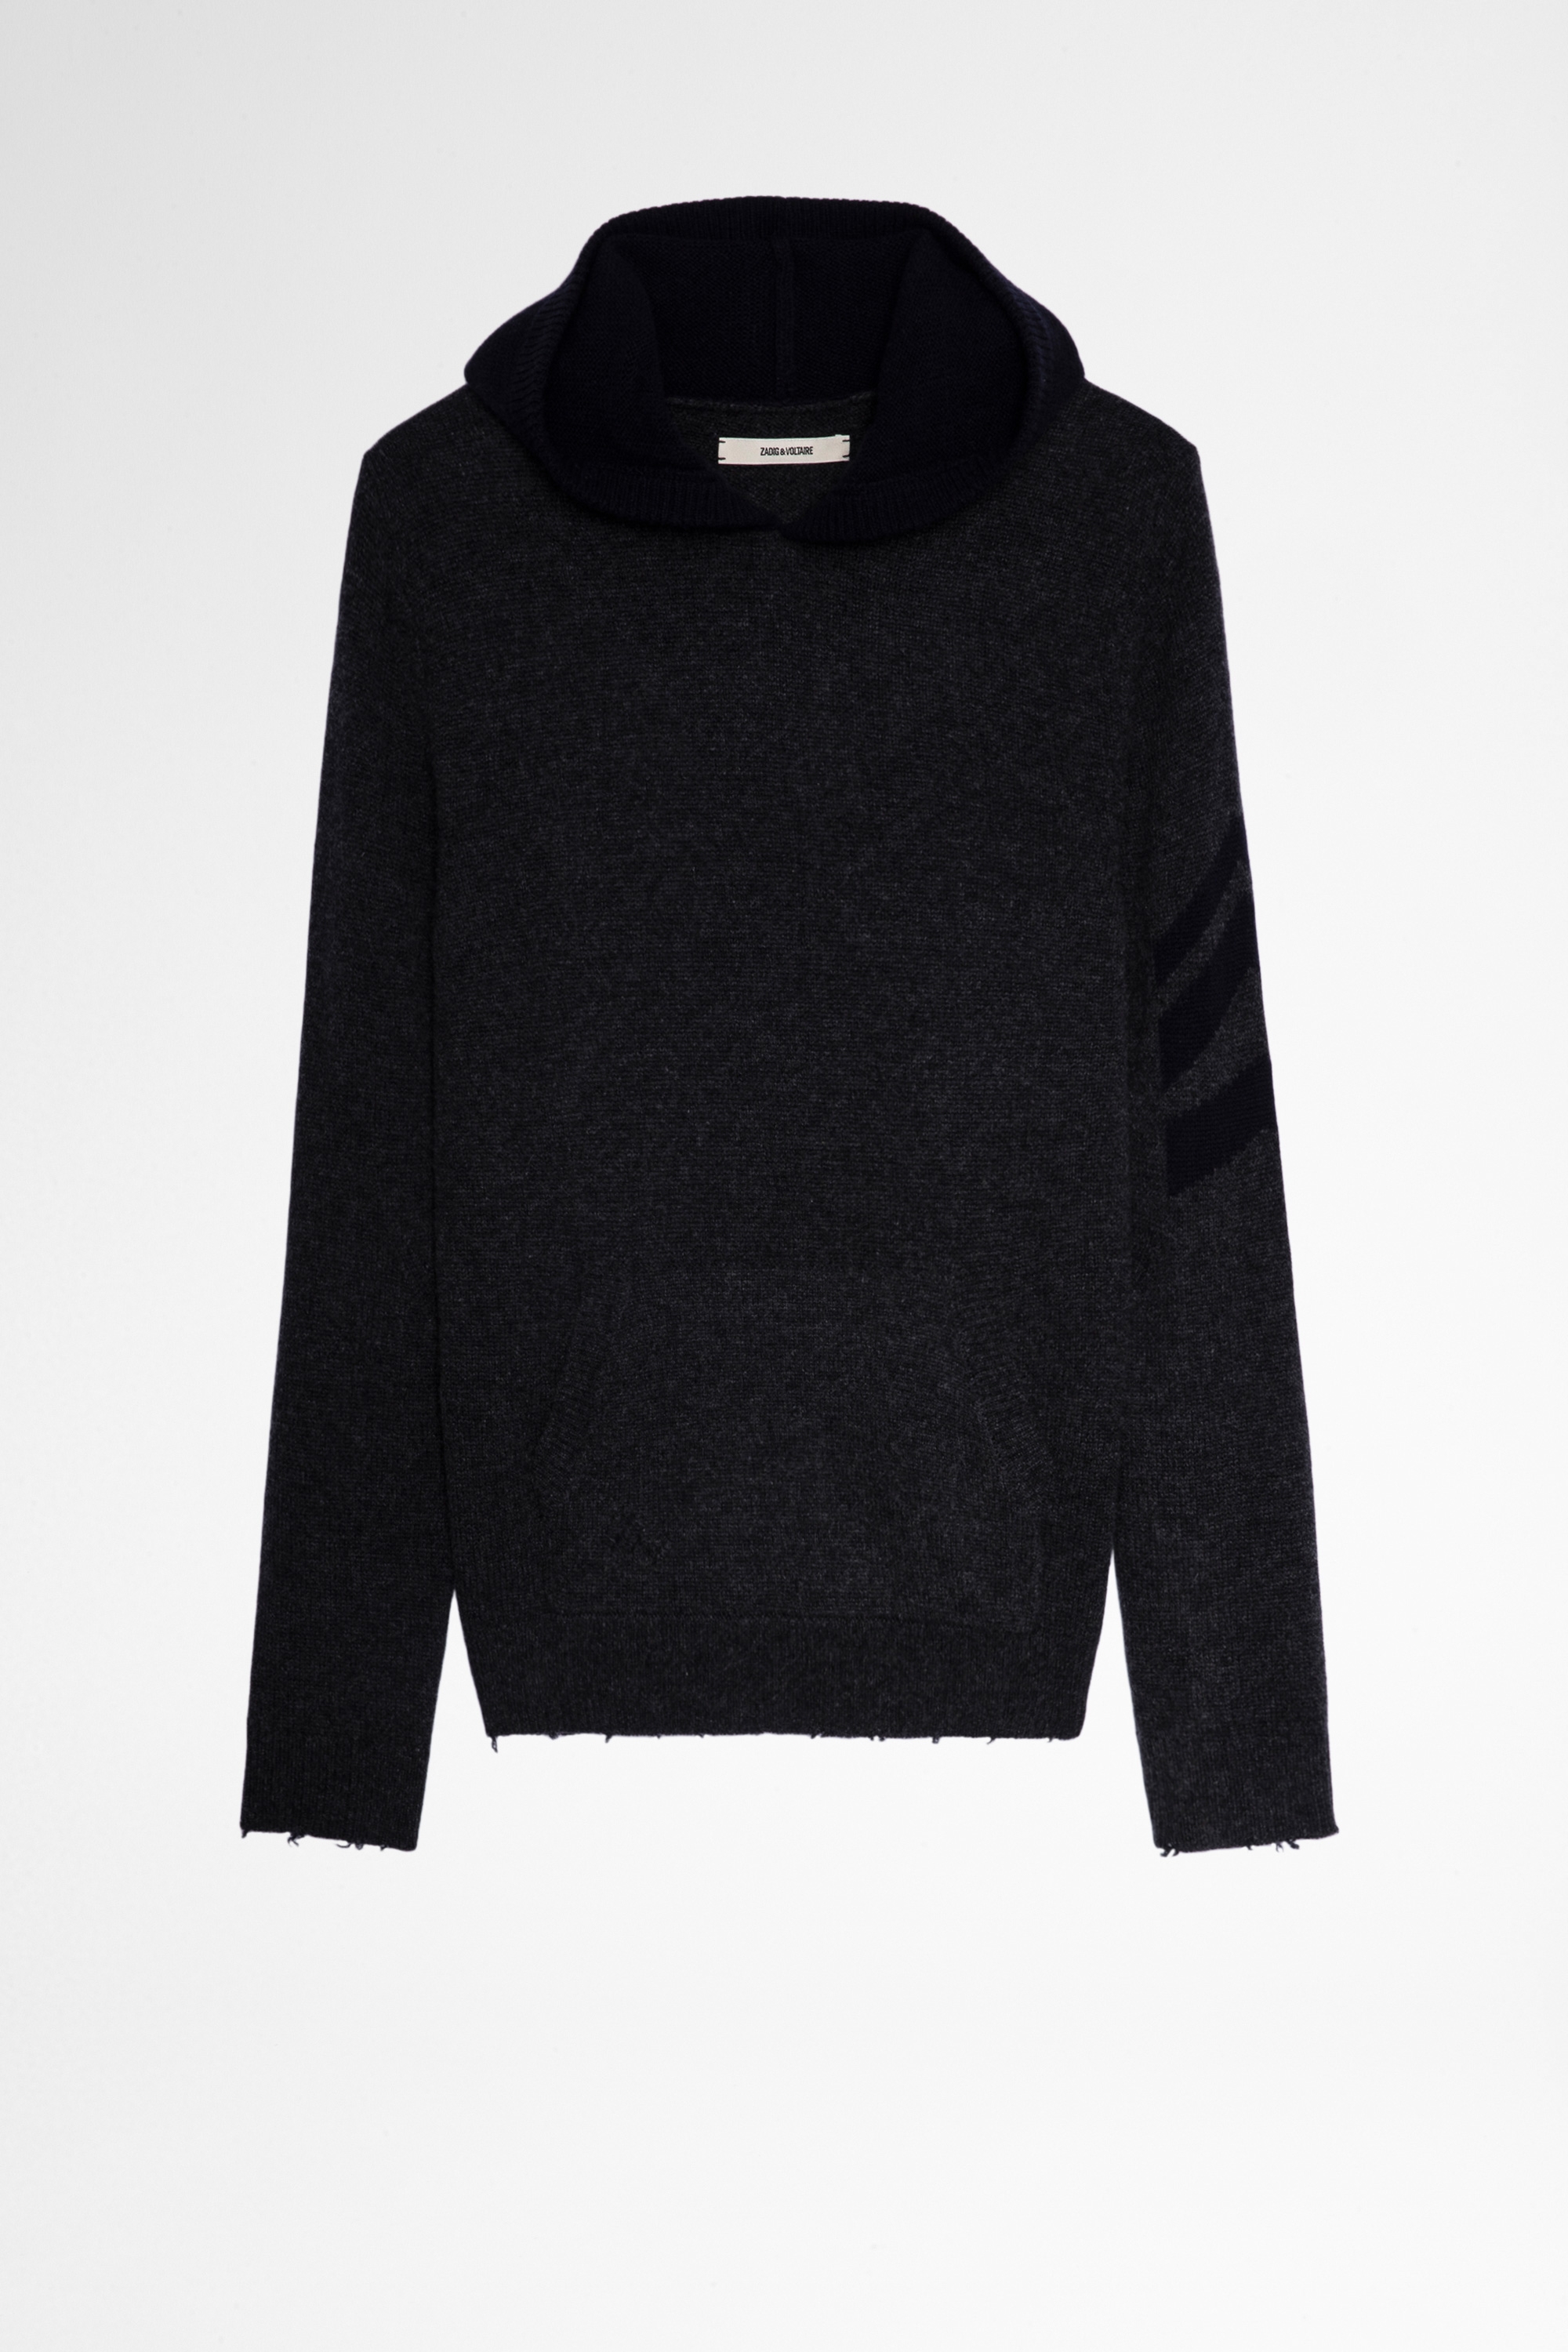 Clay Arrow Sweater